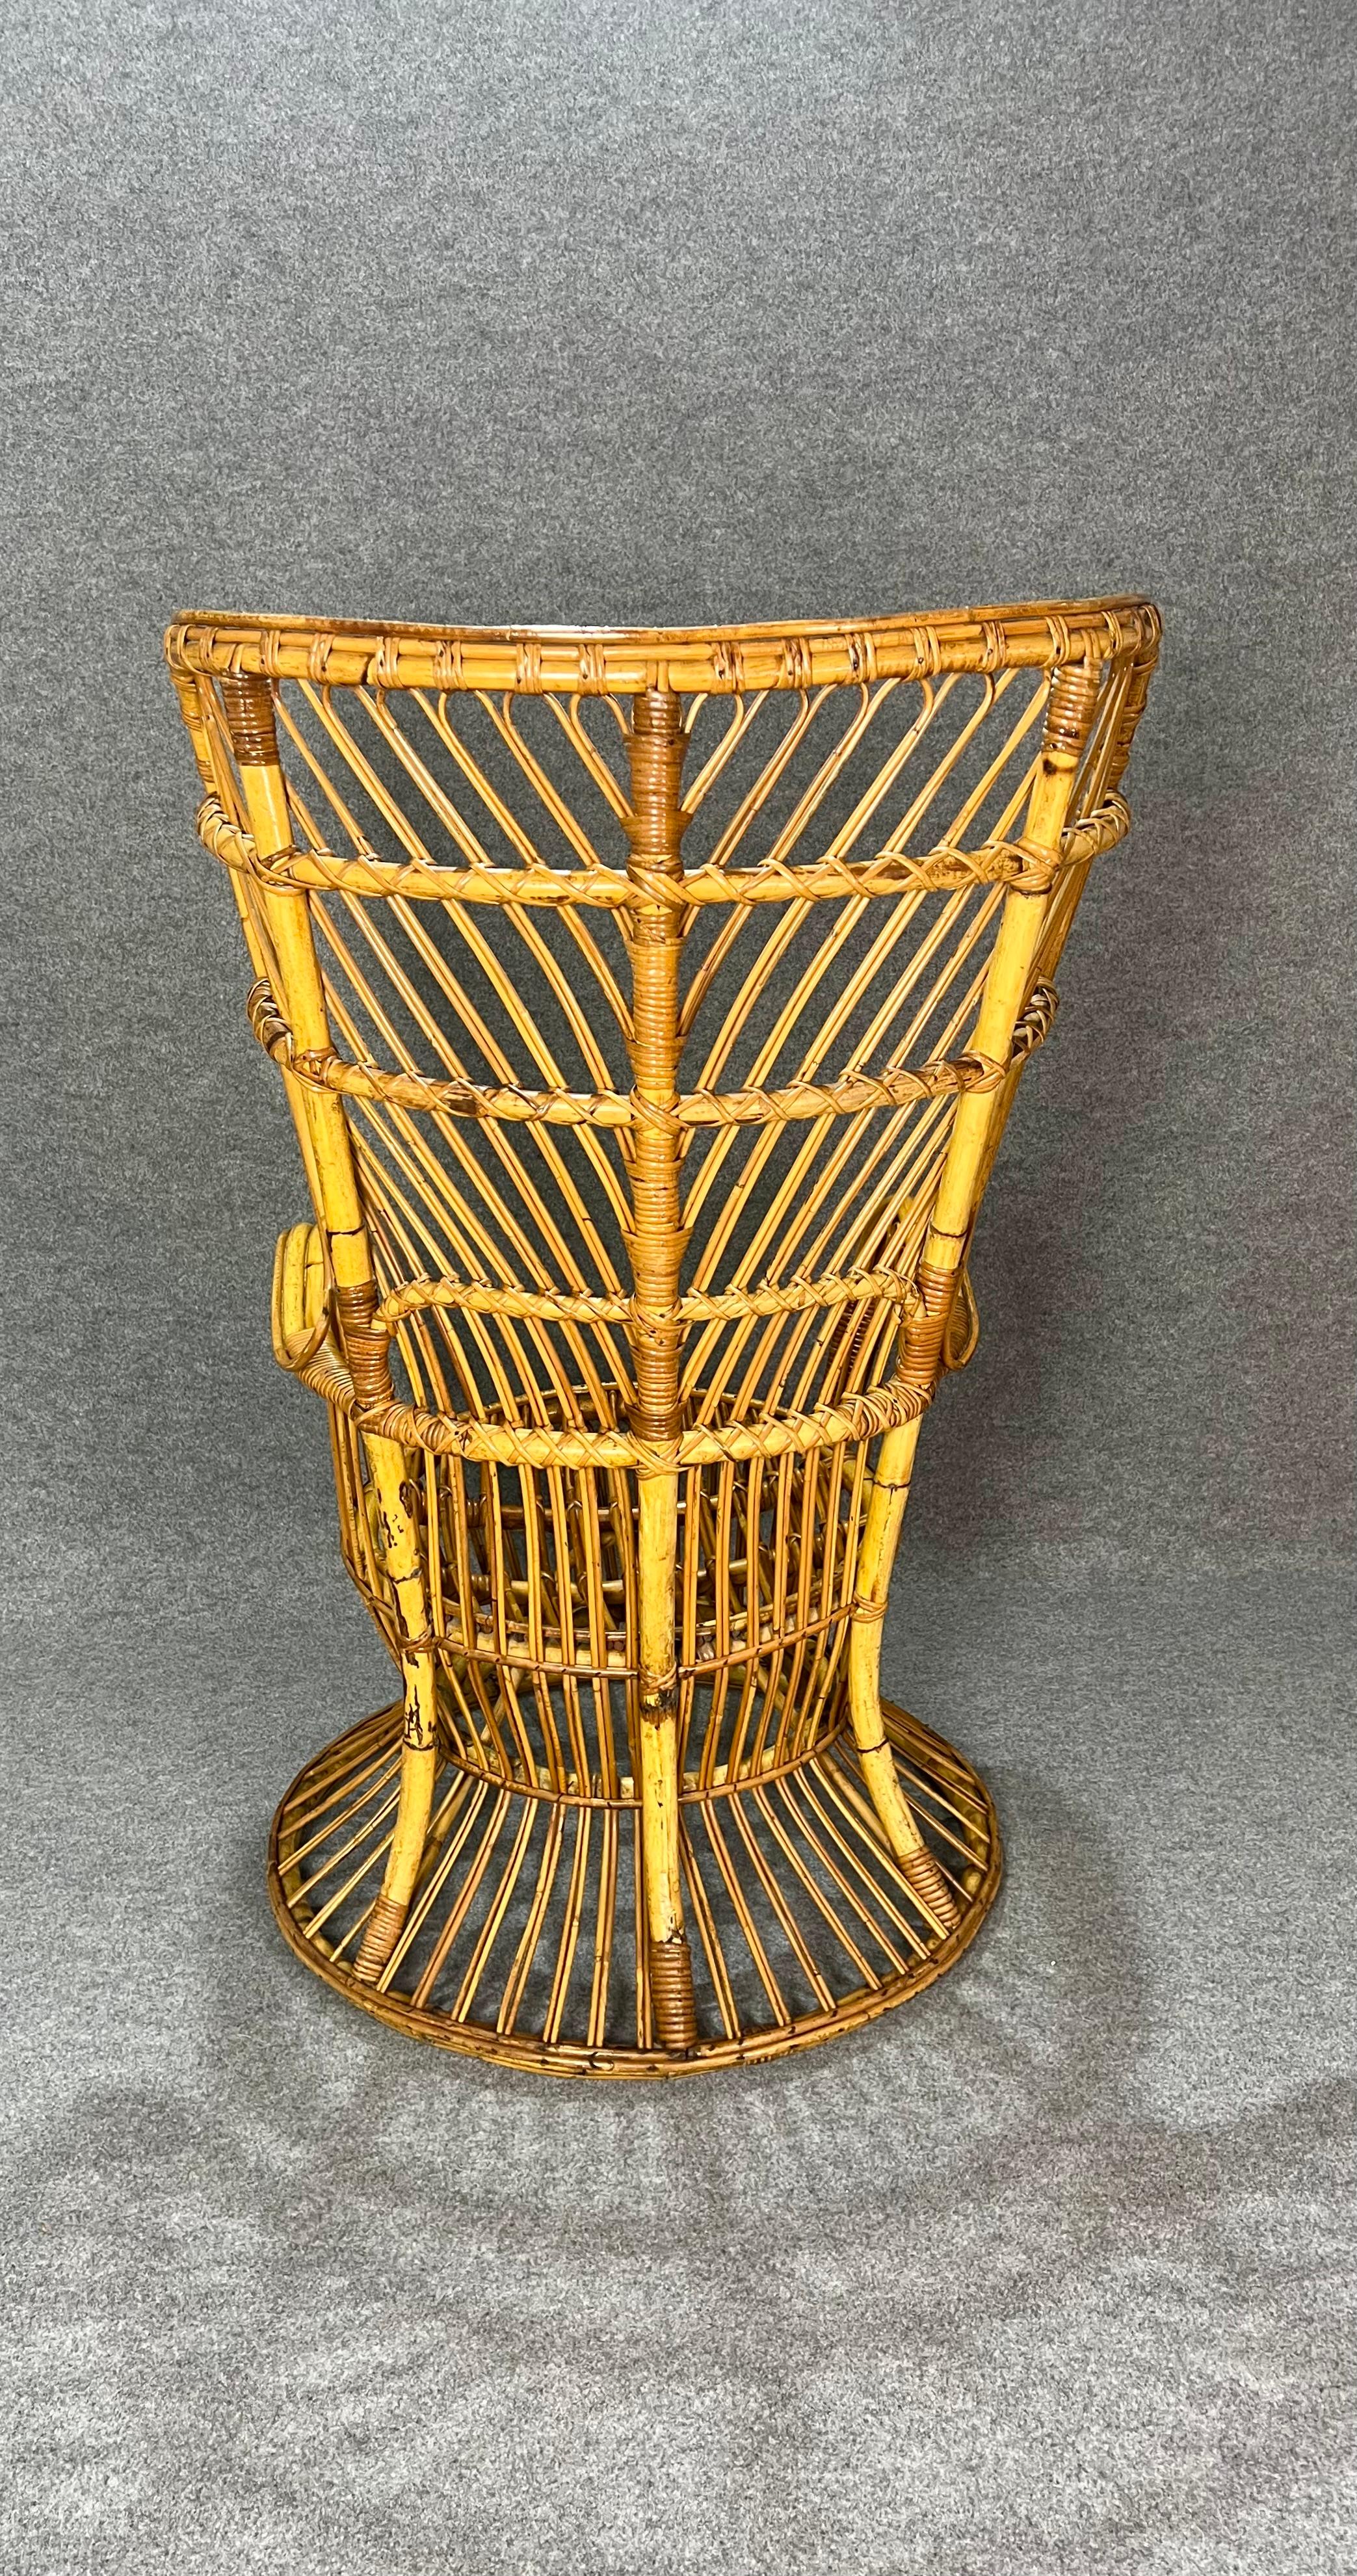 Armchair Bamboo Rattan In the Style of Gio Ponti Lio Carminati Midcentury 1950s For Sale 2